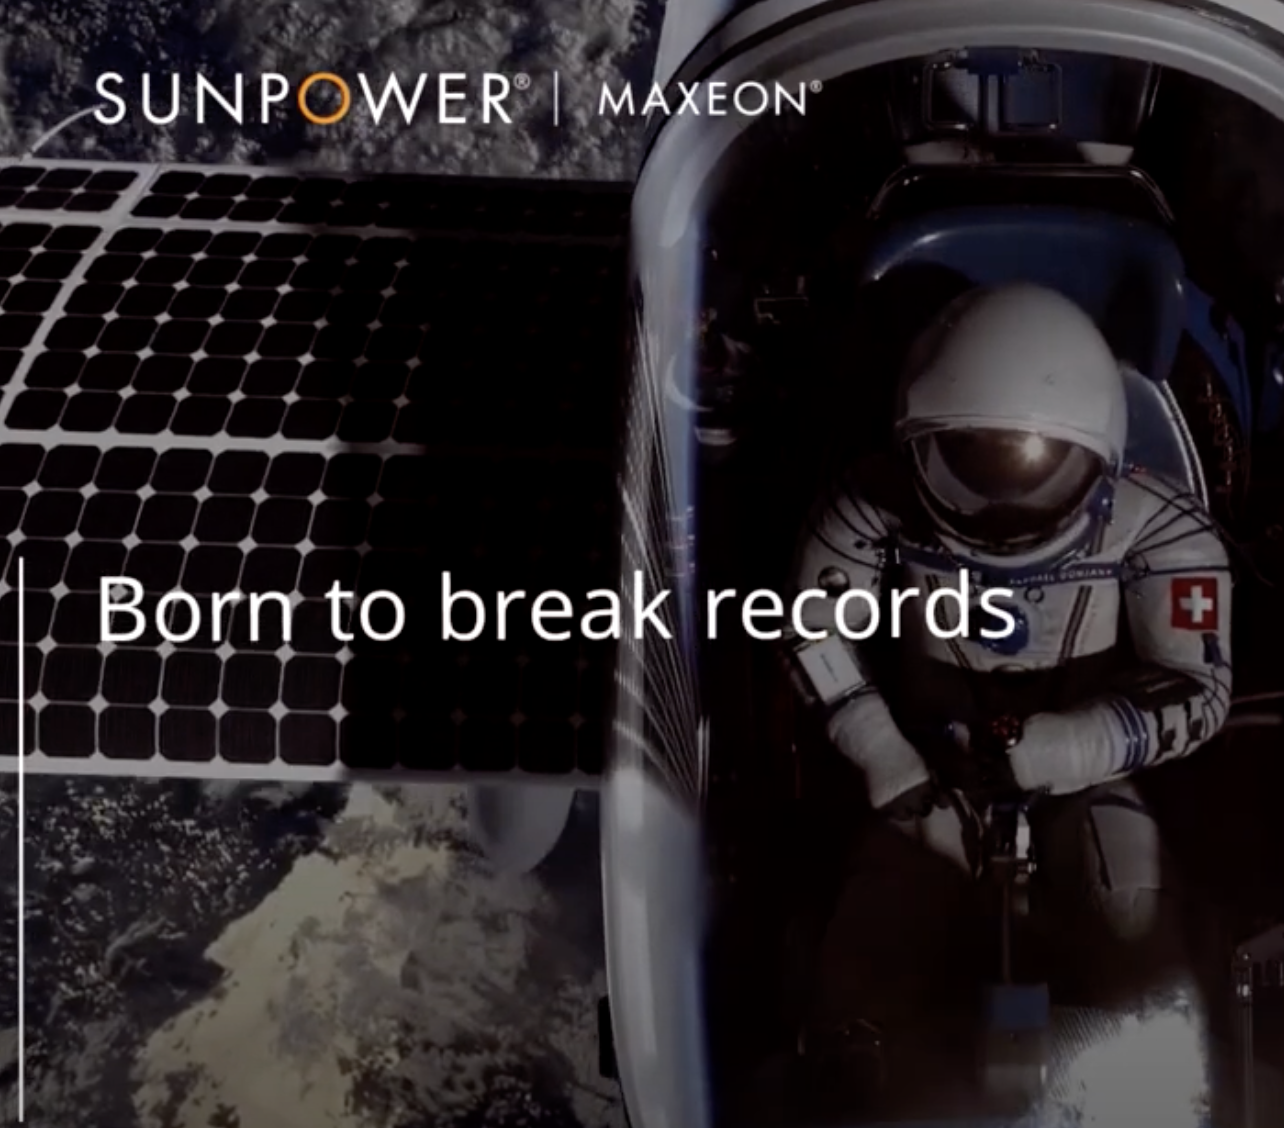 Sunpower maxeon 3 verdens bedste solcellepanel